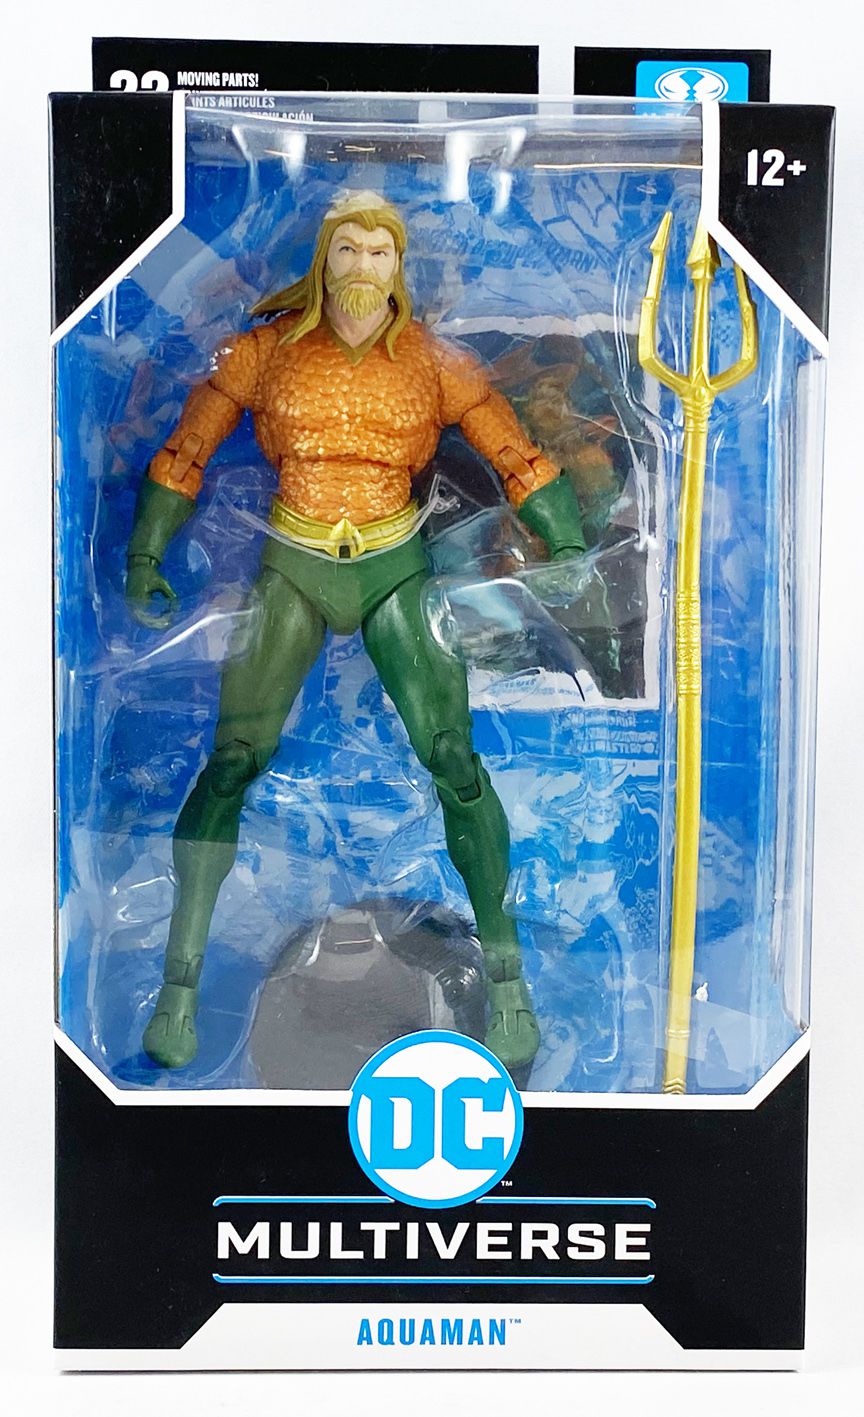 McFarlane - DC Justice League 7 Figures - Aquaman